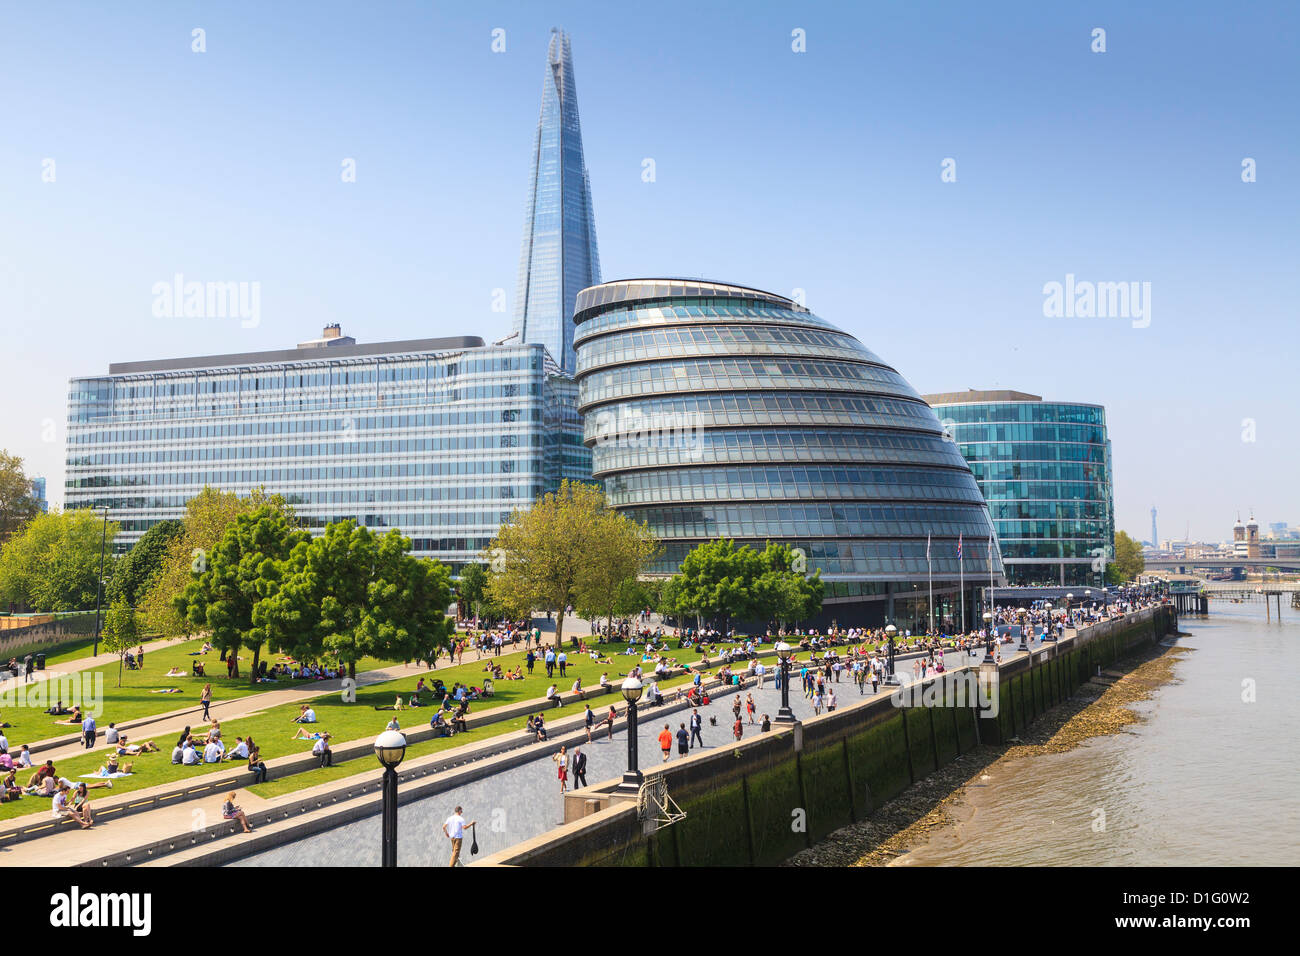 South Bank with City Hall, Shard London Bridge and More London buildings, London, England, United Kingdom, Europe Stock Photo